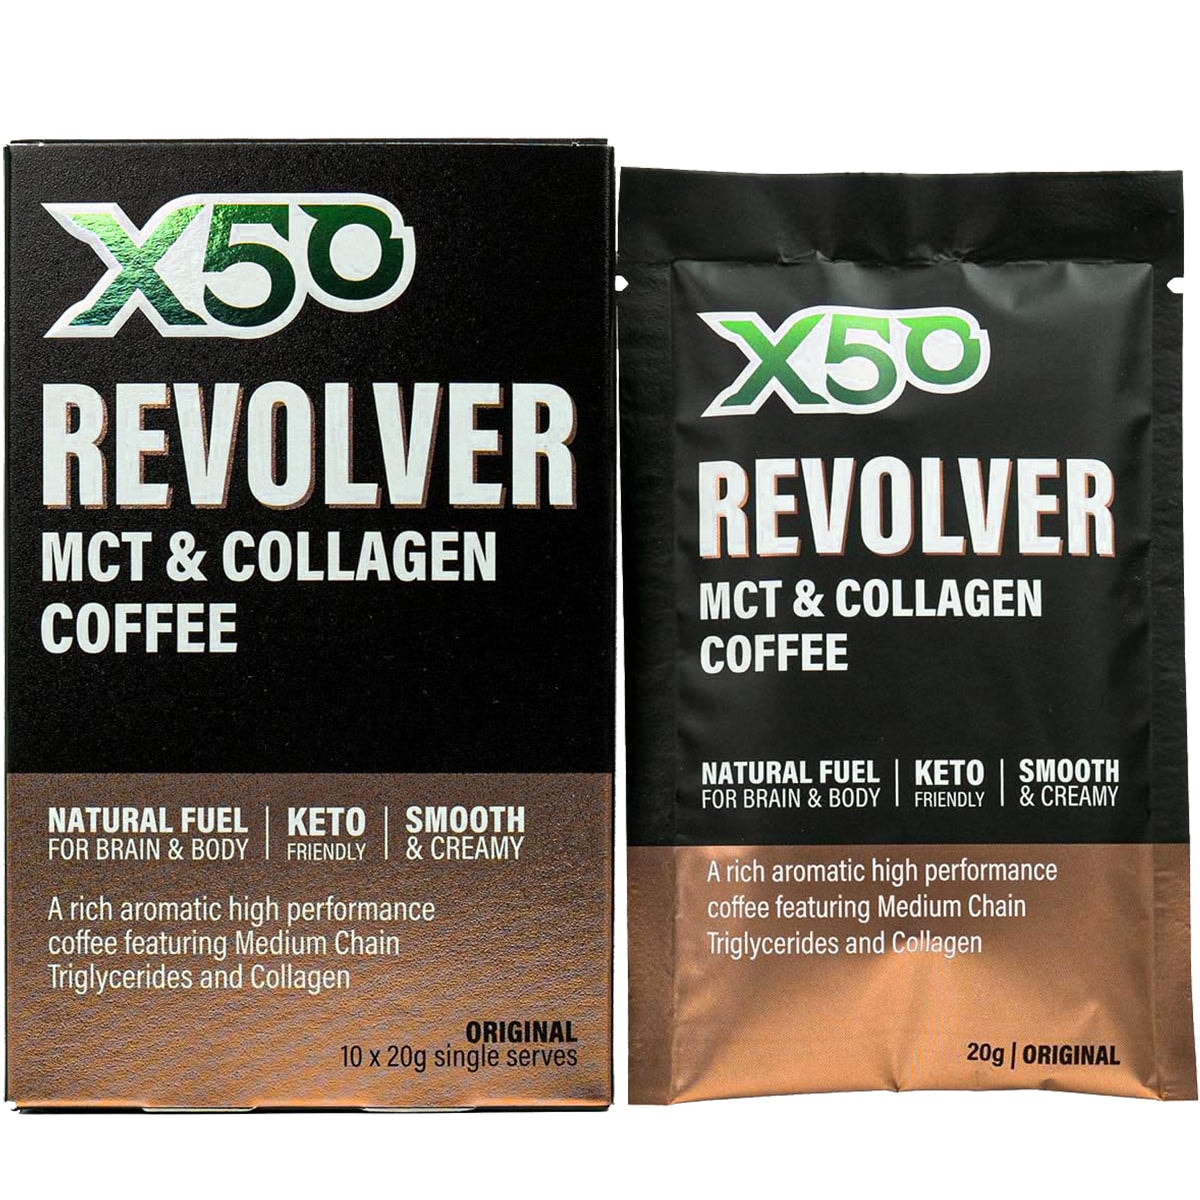 X50 Revolver MCT and Collagen Coffee Original - 10 serves